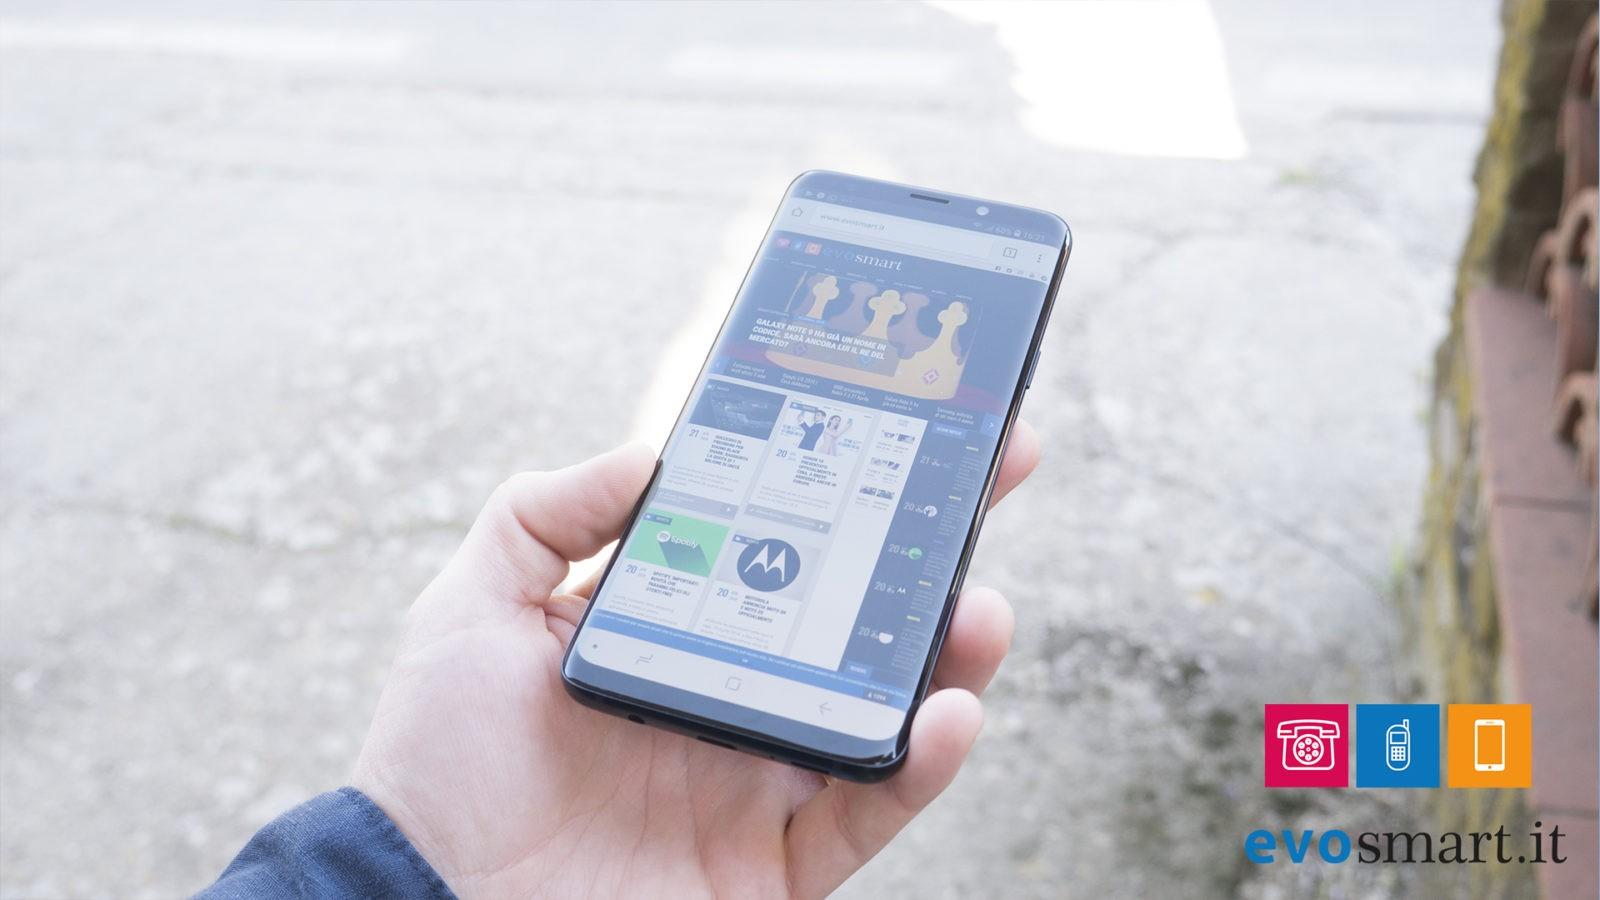 Samsung Galaxy S9 Plus display all'aperto | EvoSmart.it